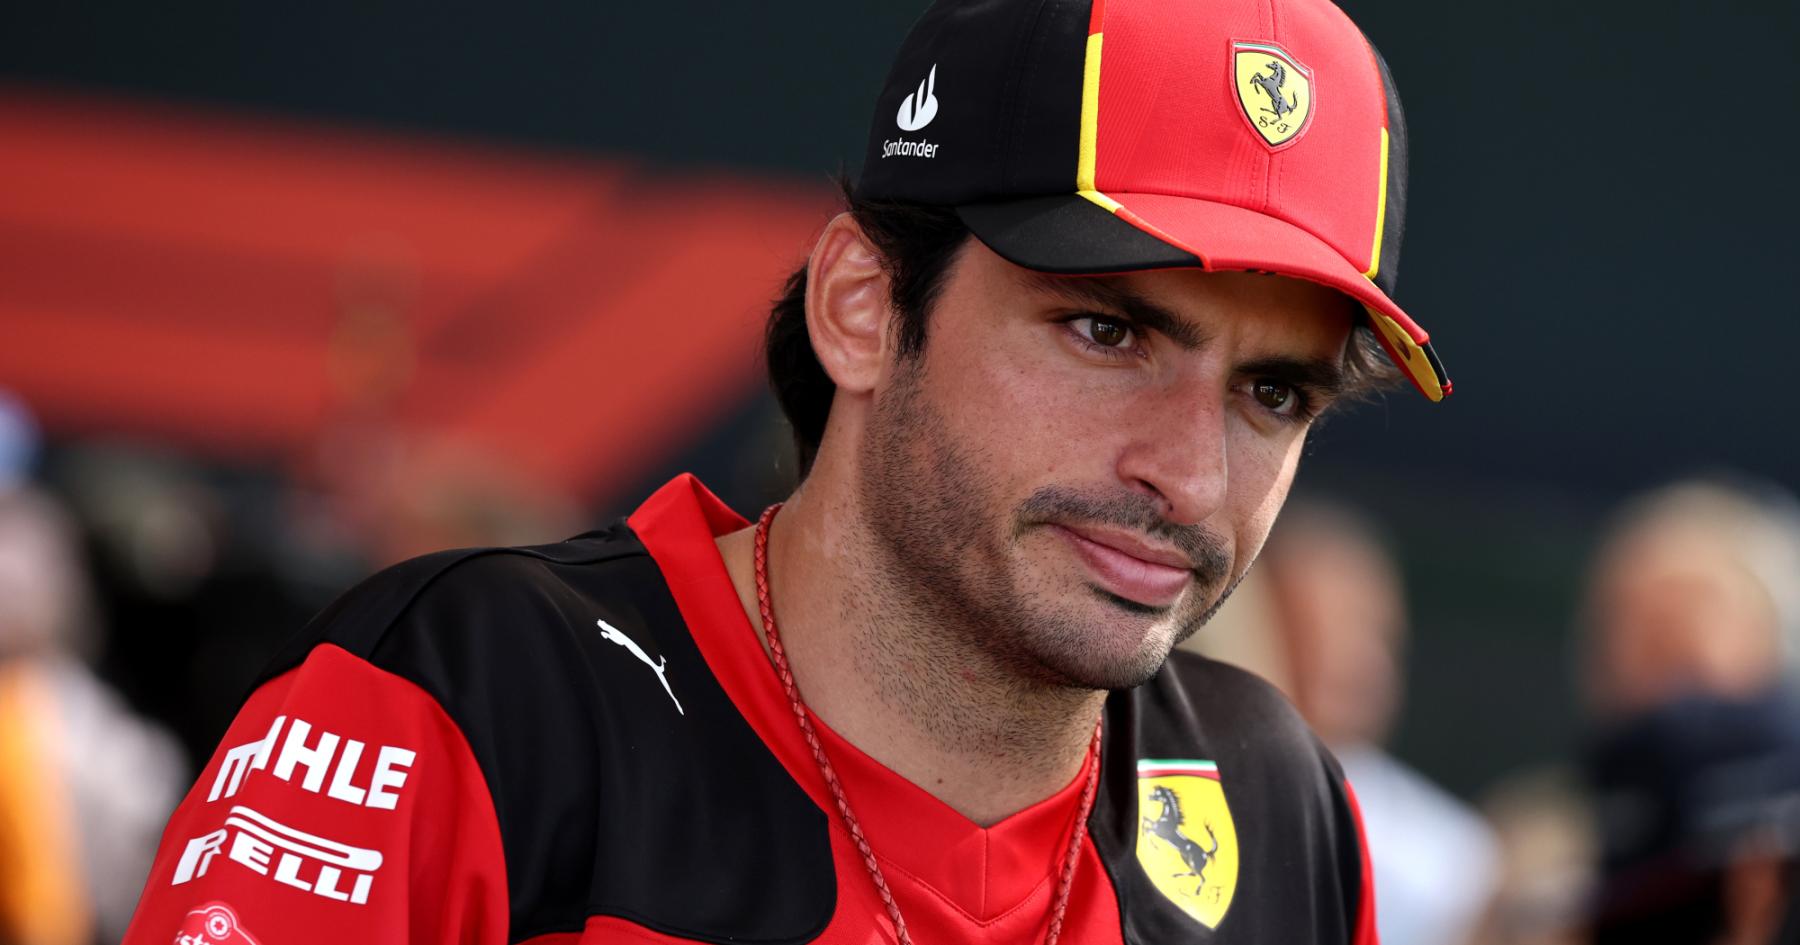 Sainz Embraces New Horizons: Reflecting on His Ferrari F1 Journey and Beyond